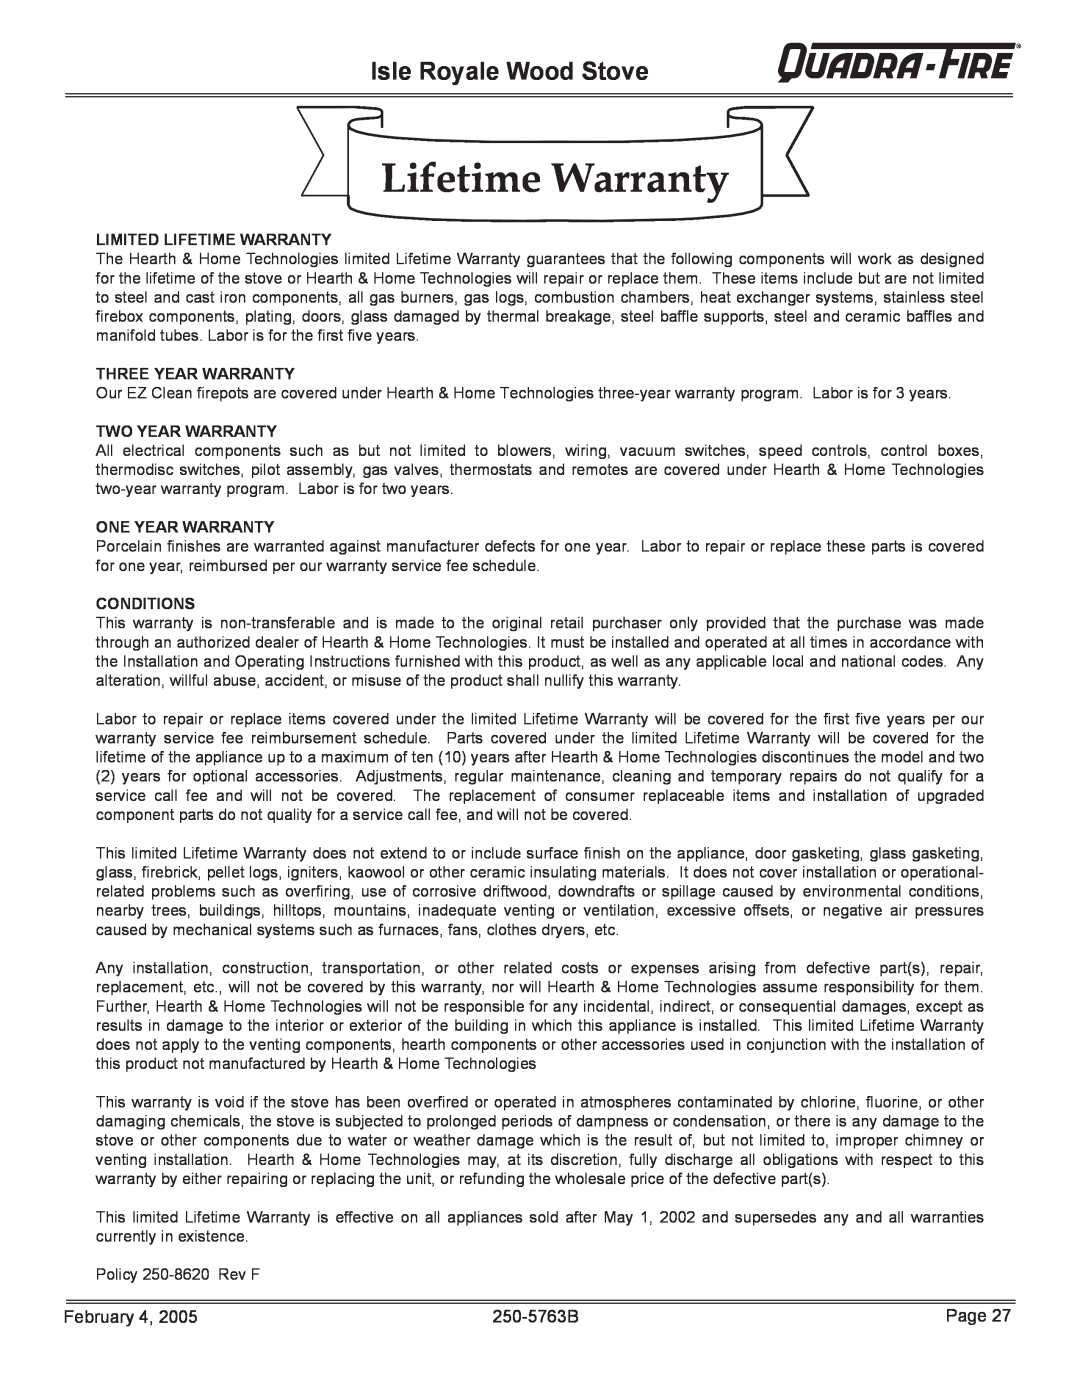 Quadra-Fire Isle Royale Wood Stove, Limited Lifetime Warranty, Three Year Warranty, Two Year Warranty, Conditions 